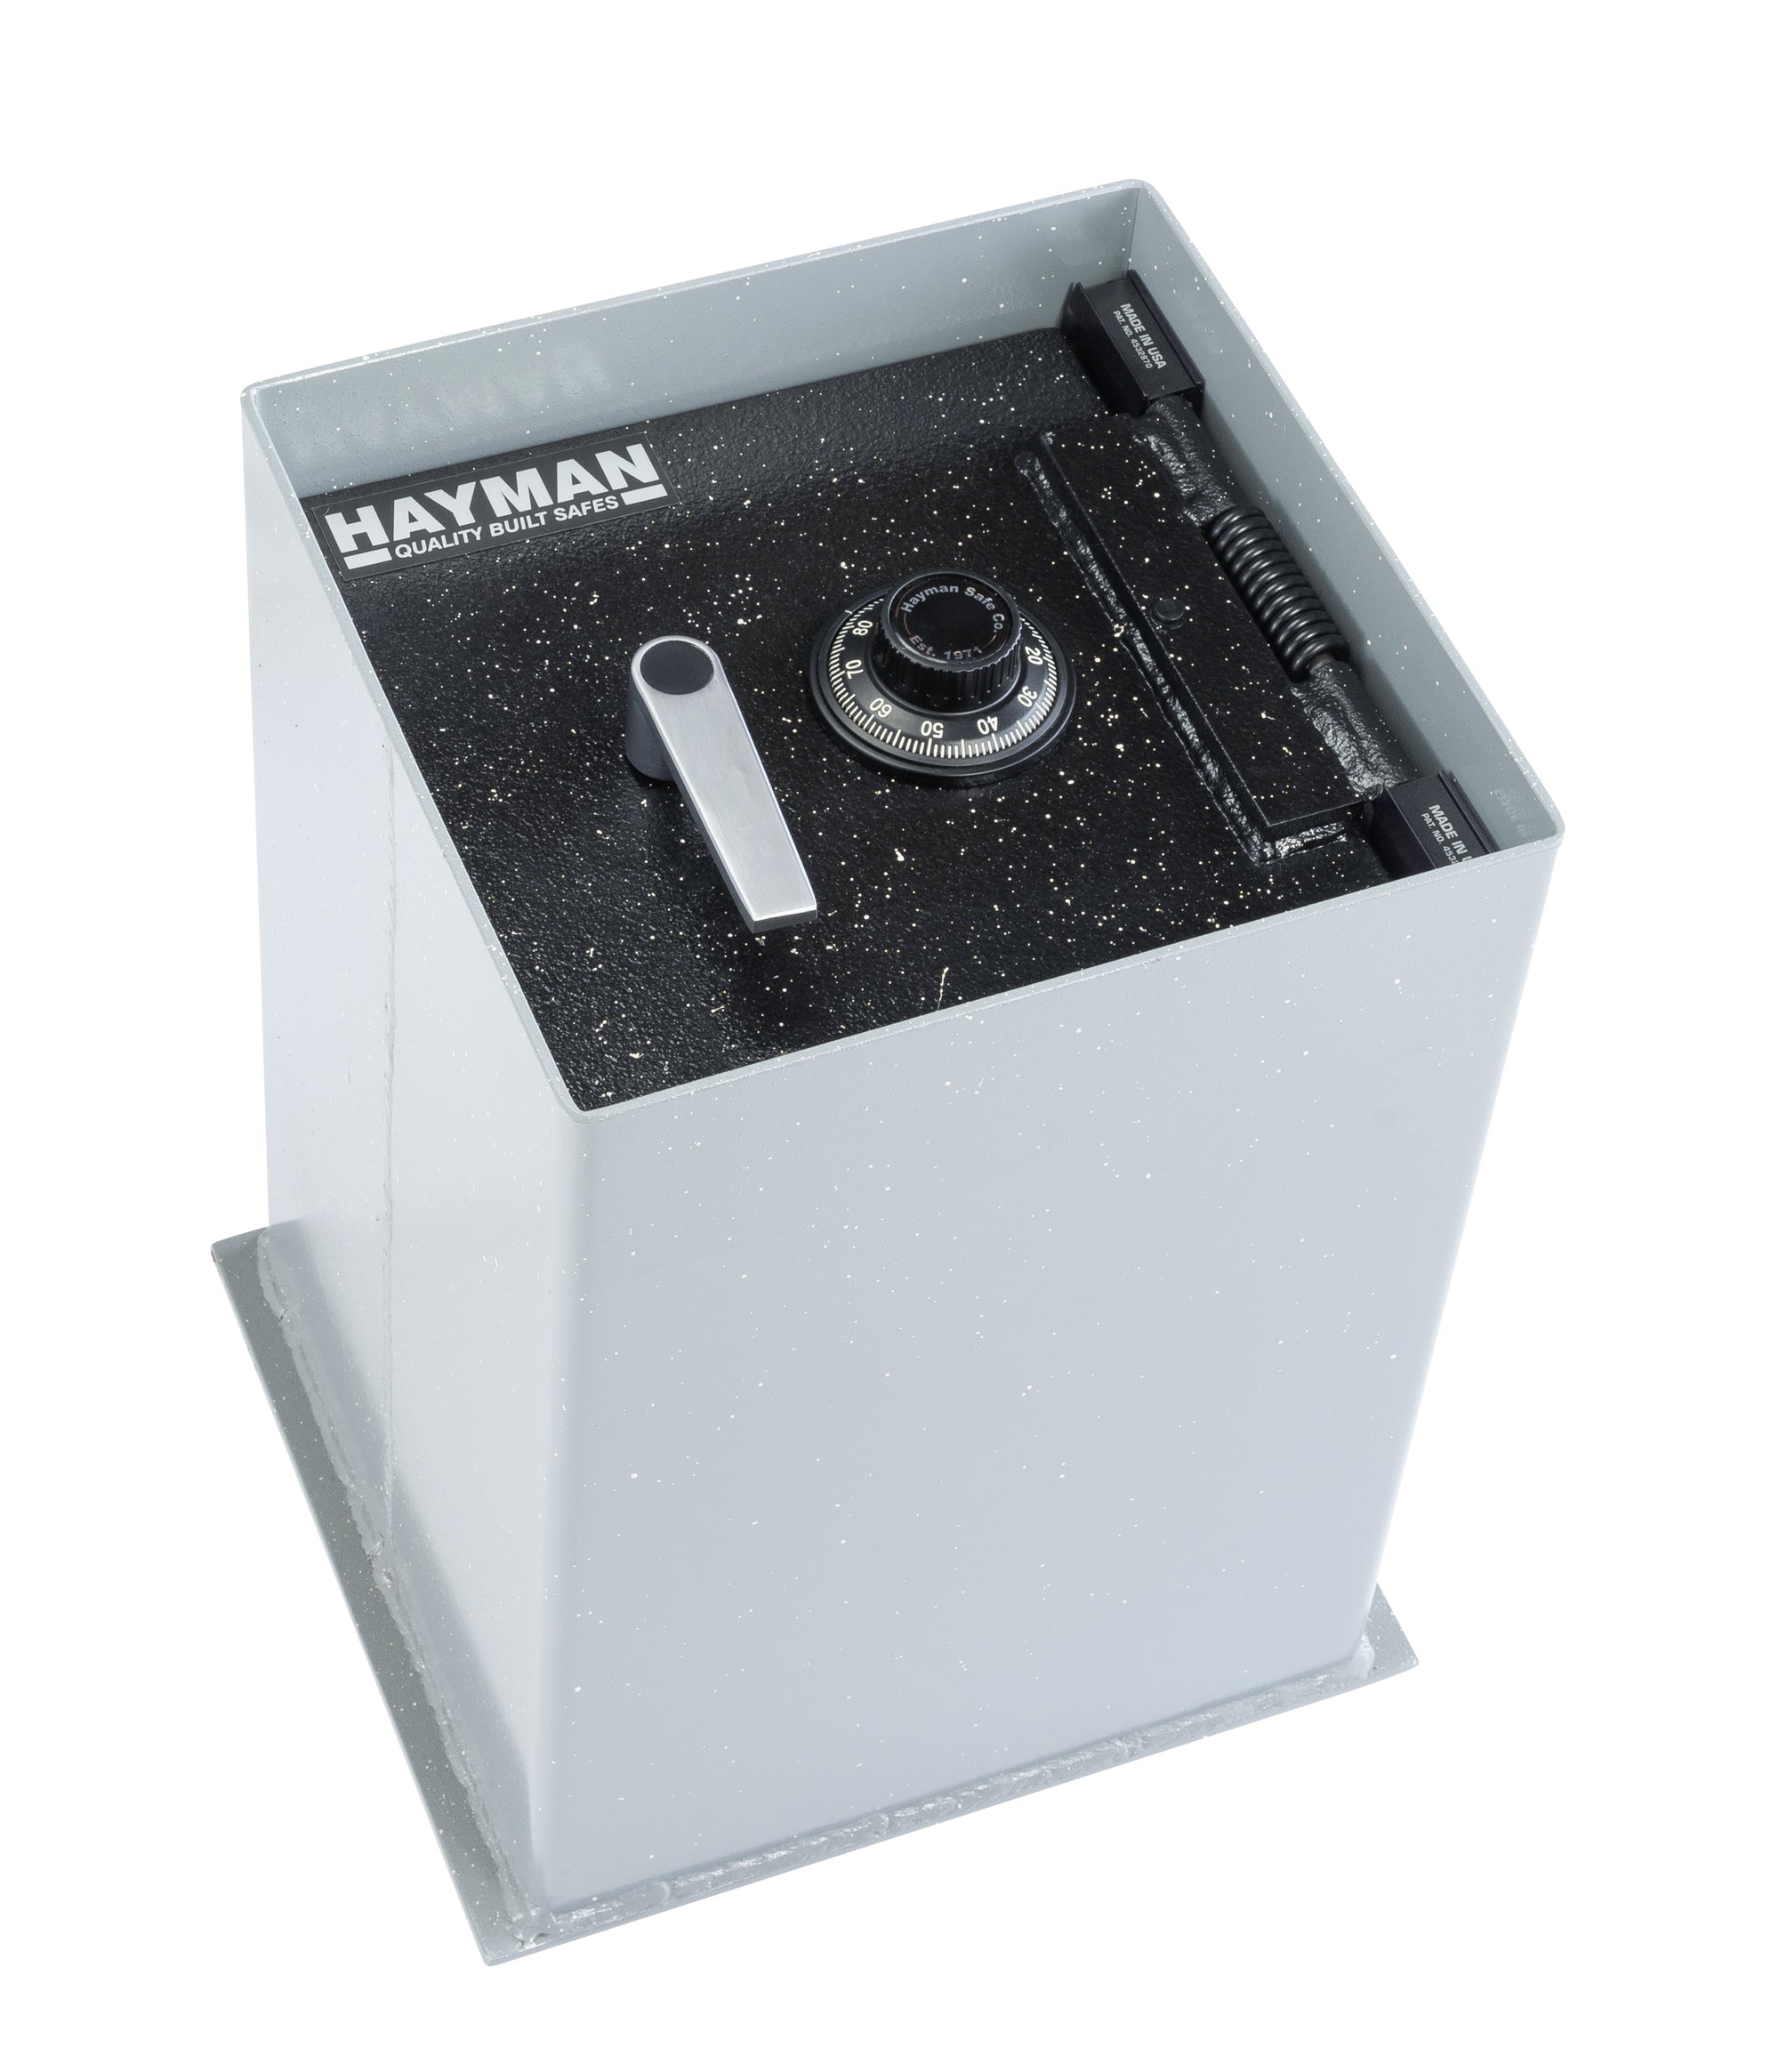 Hayman FS16 Steel Body Floor Safe